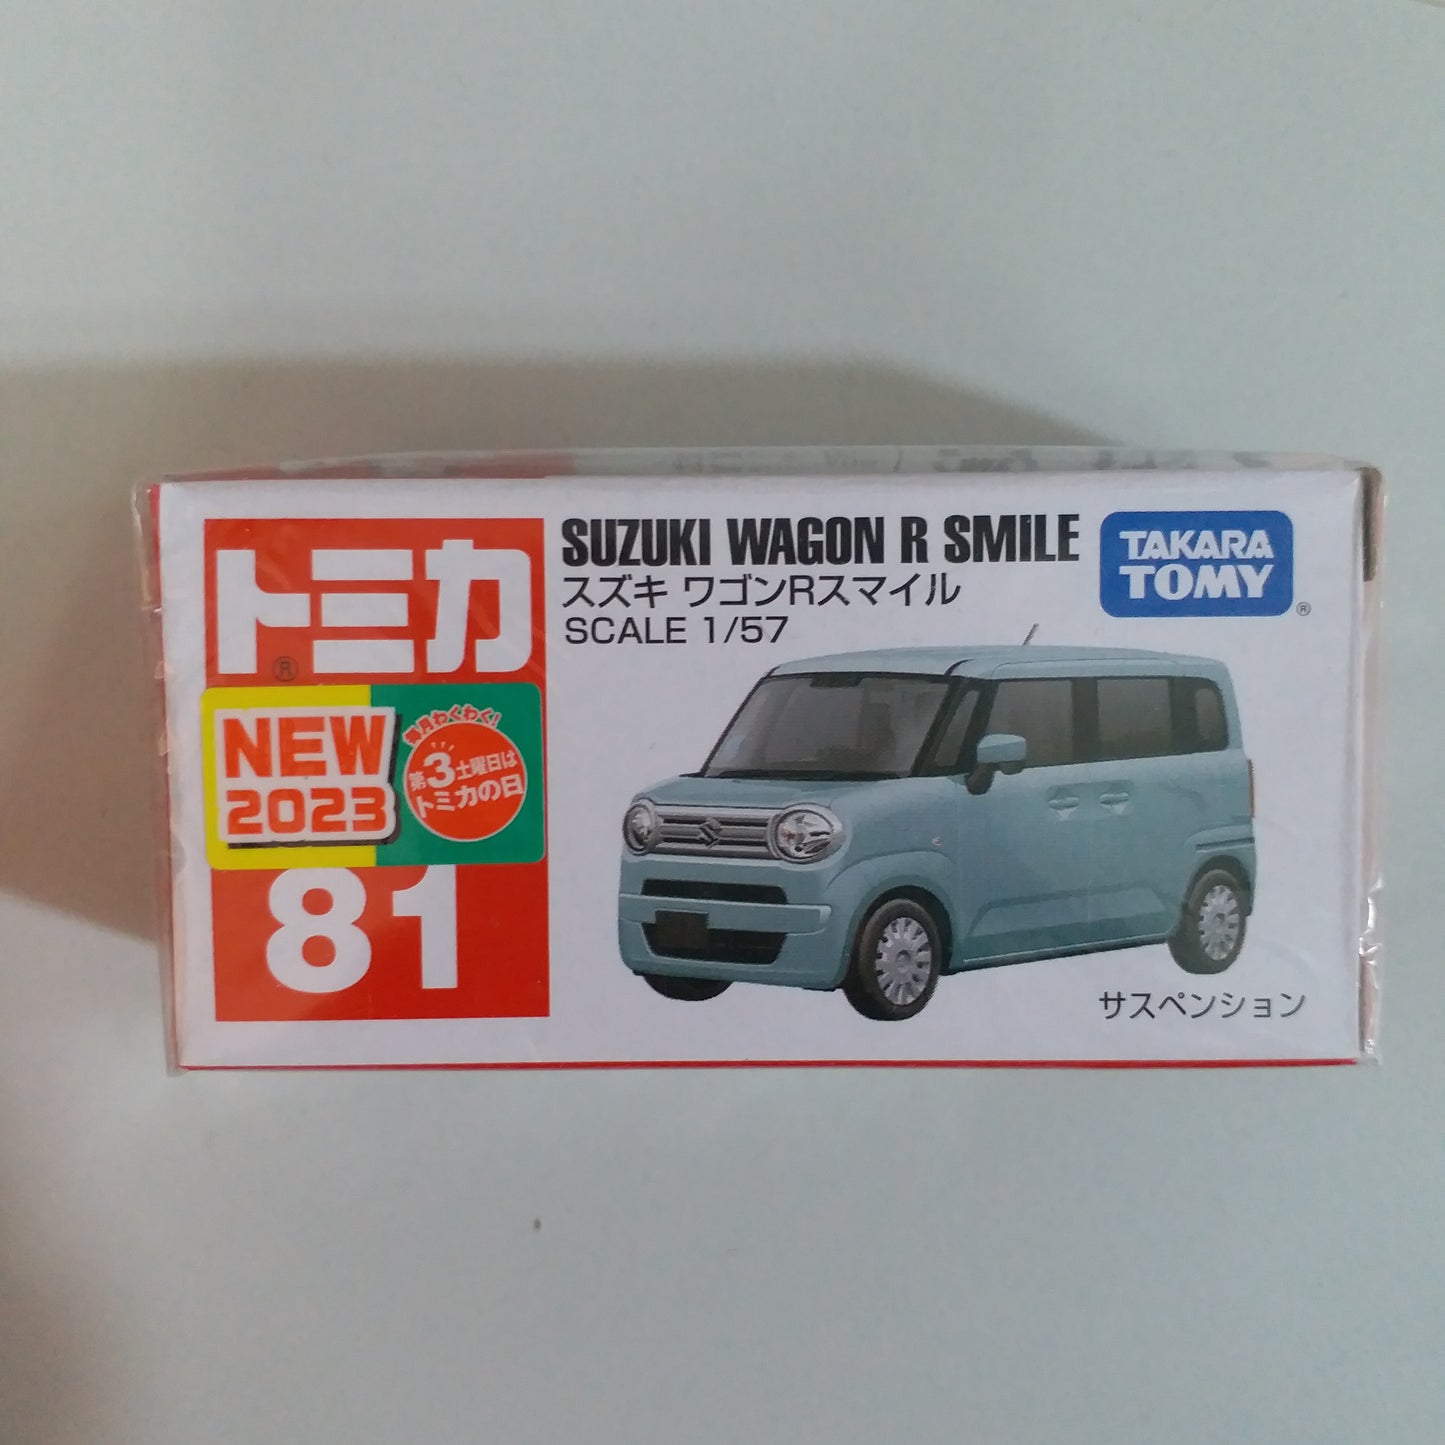 Tomica #81 Suzuki Wagon R Smile